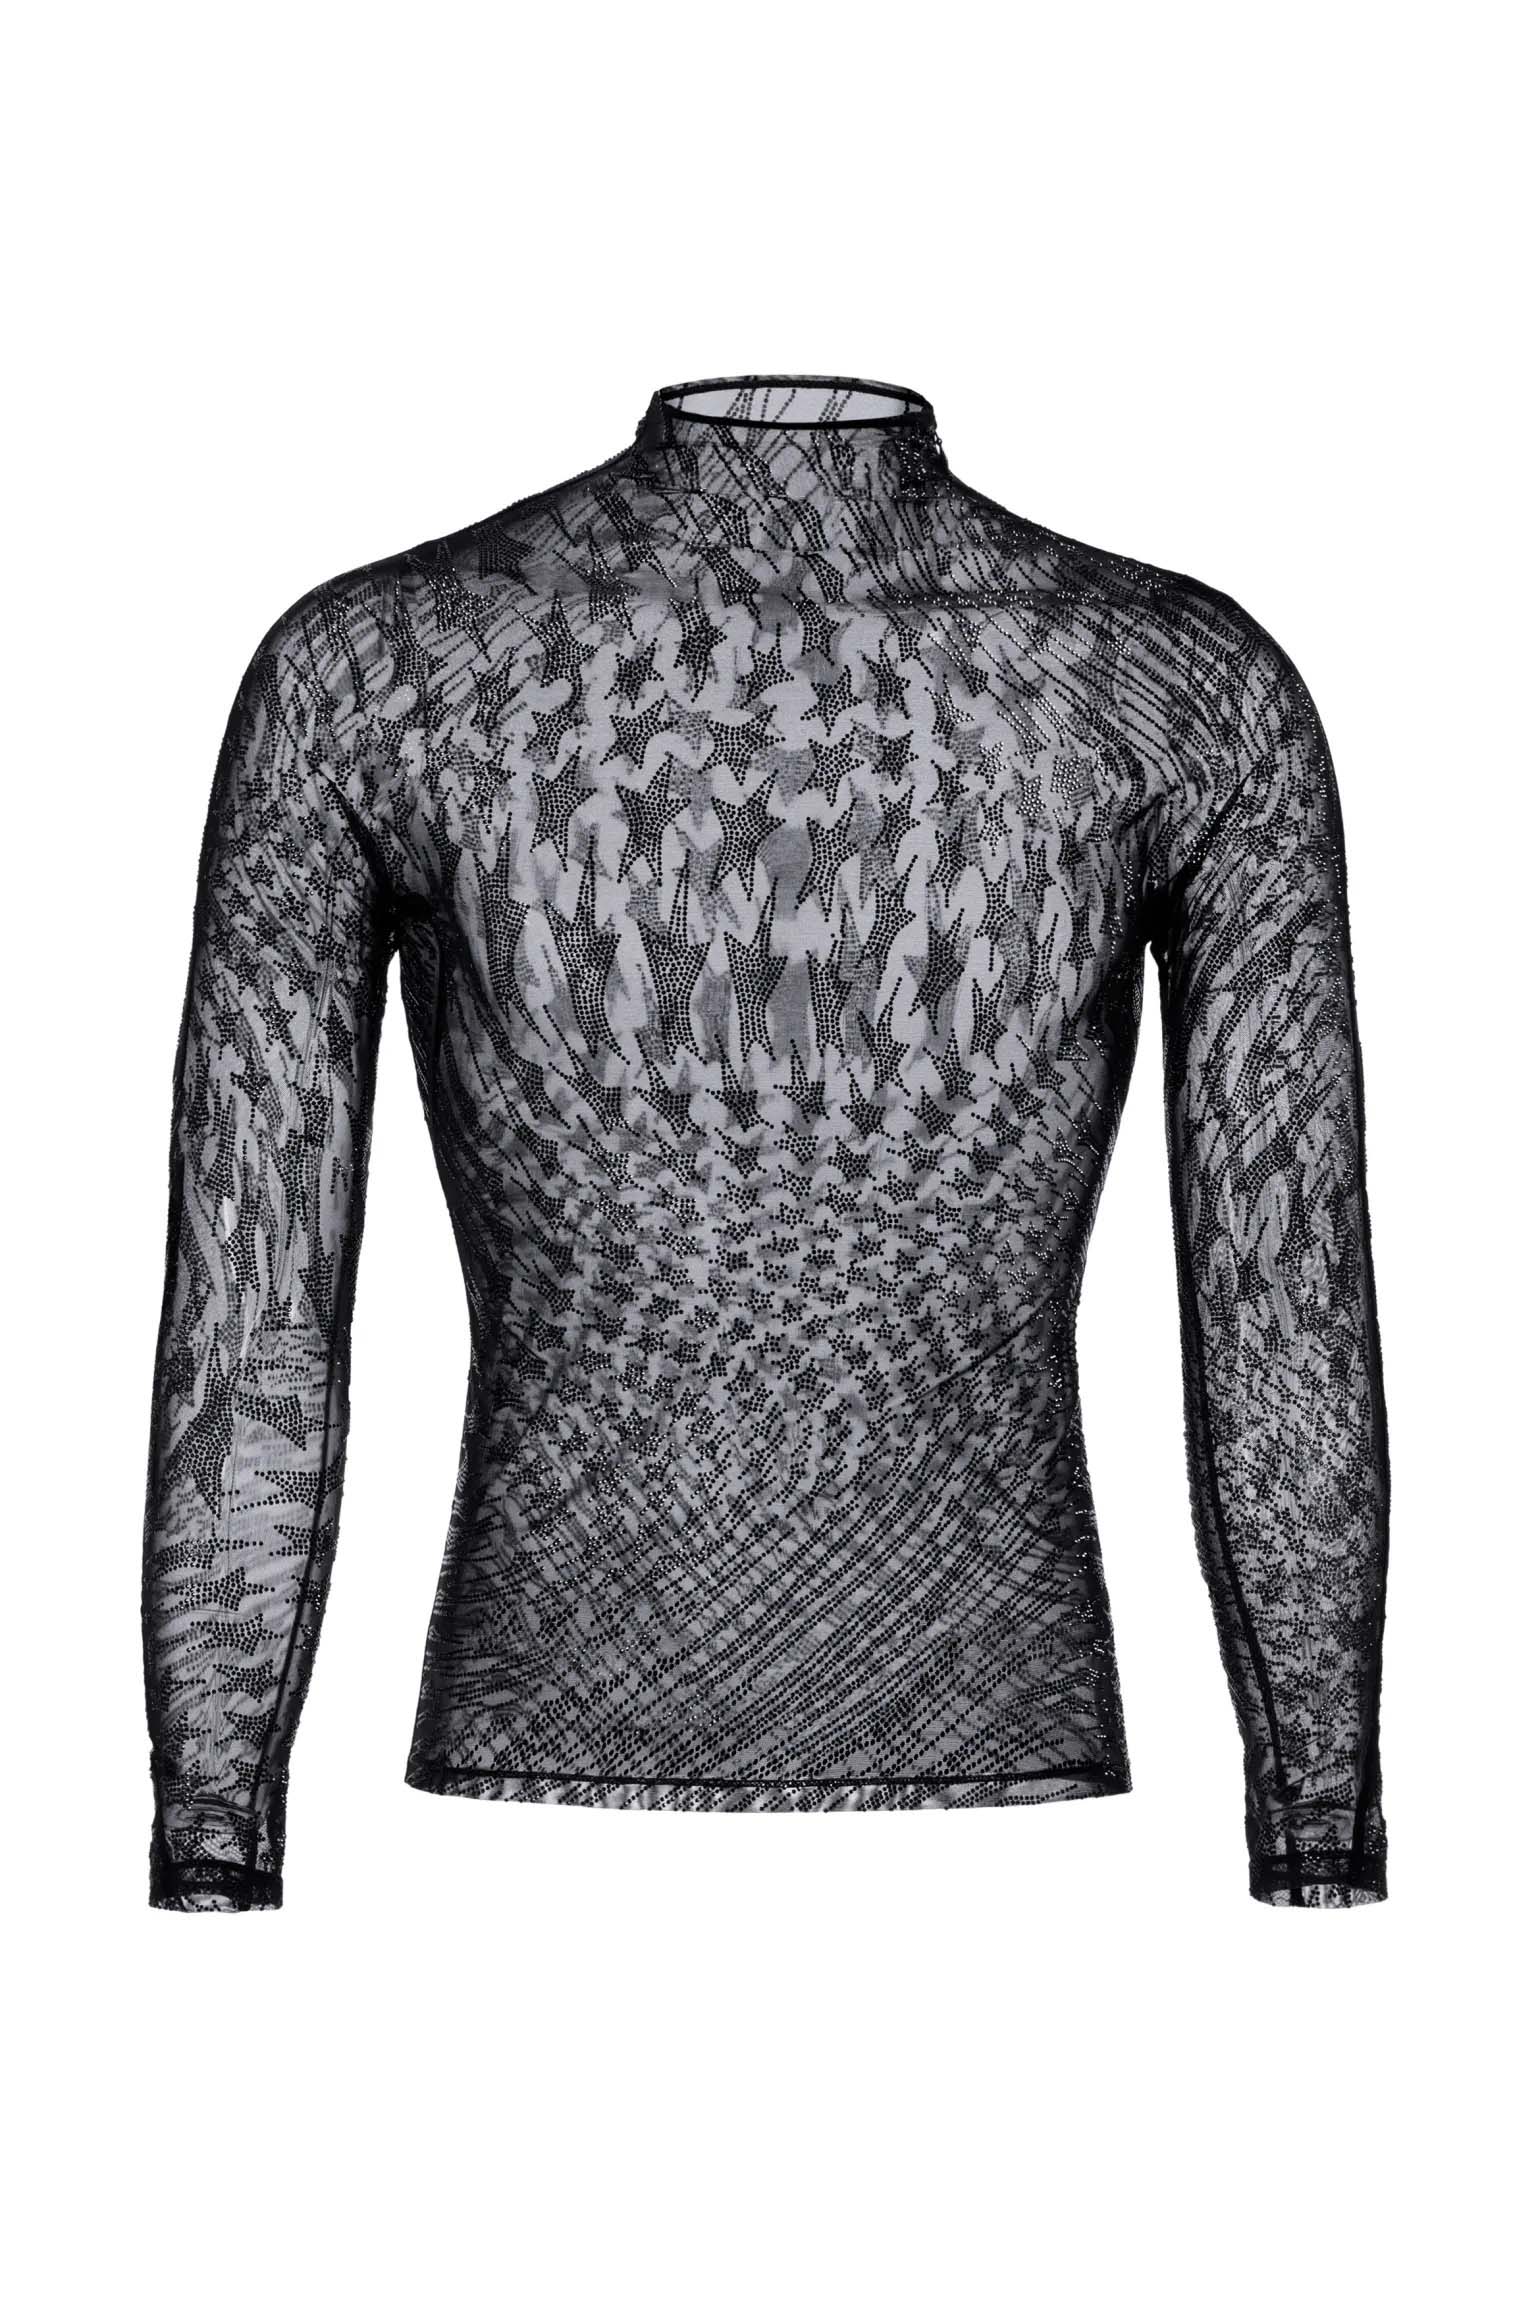 Mugler H&M Rhinestone-Embellished Mesh Shirt (Mens) Black